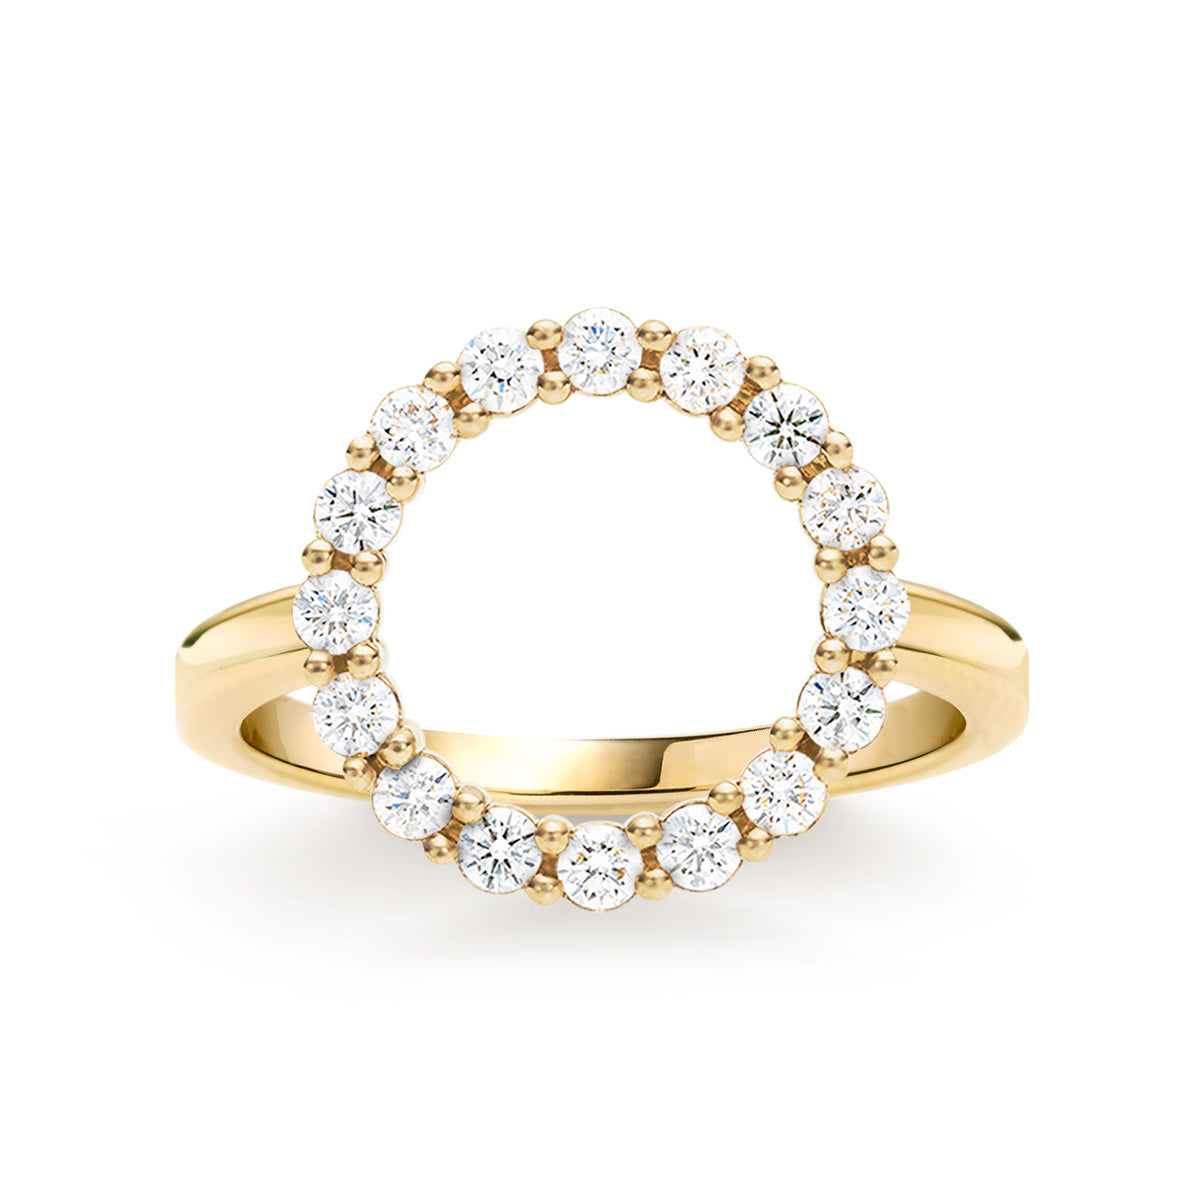 Majestic Round 22k Gold Ring | 22k gold ring, Gold rings, 22k gold